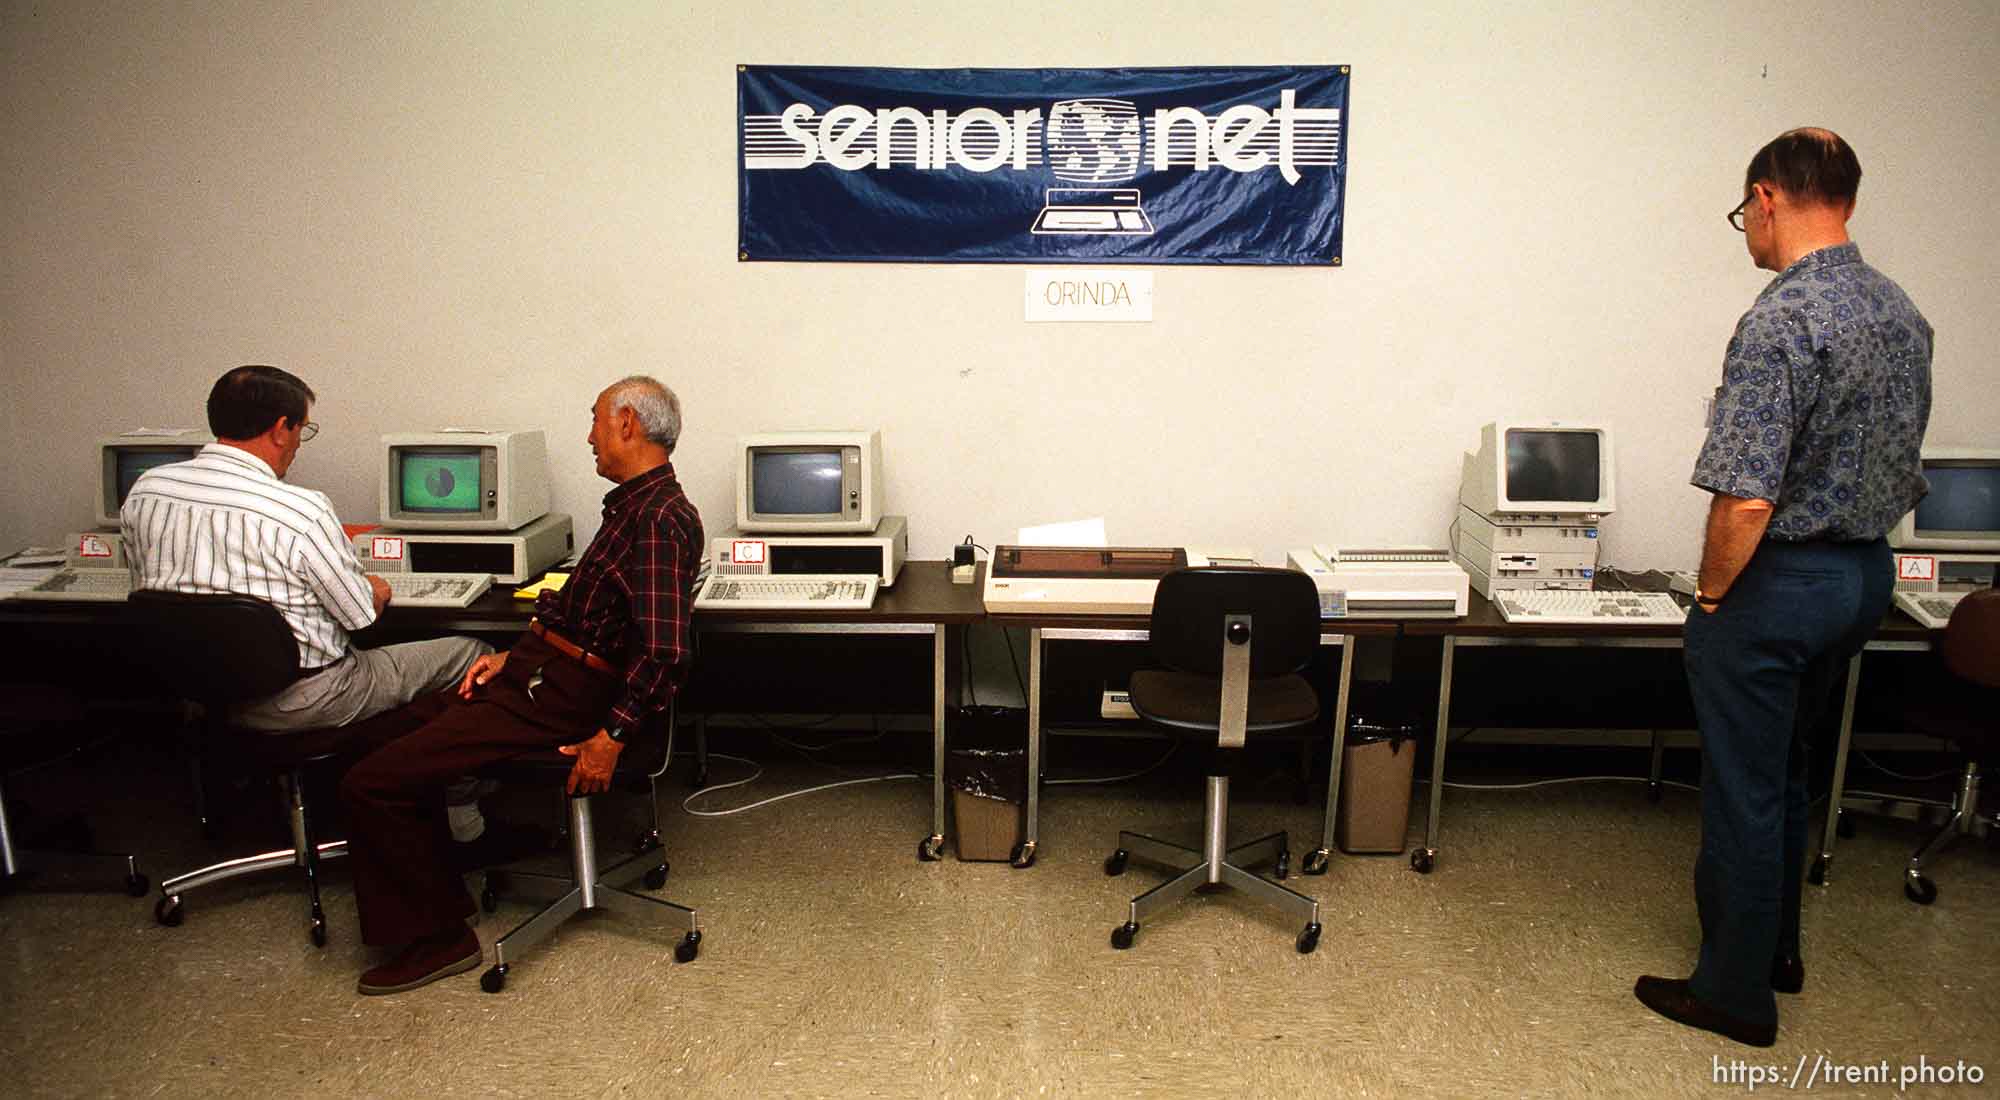 SeniorNet